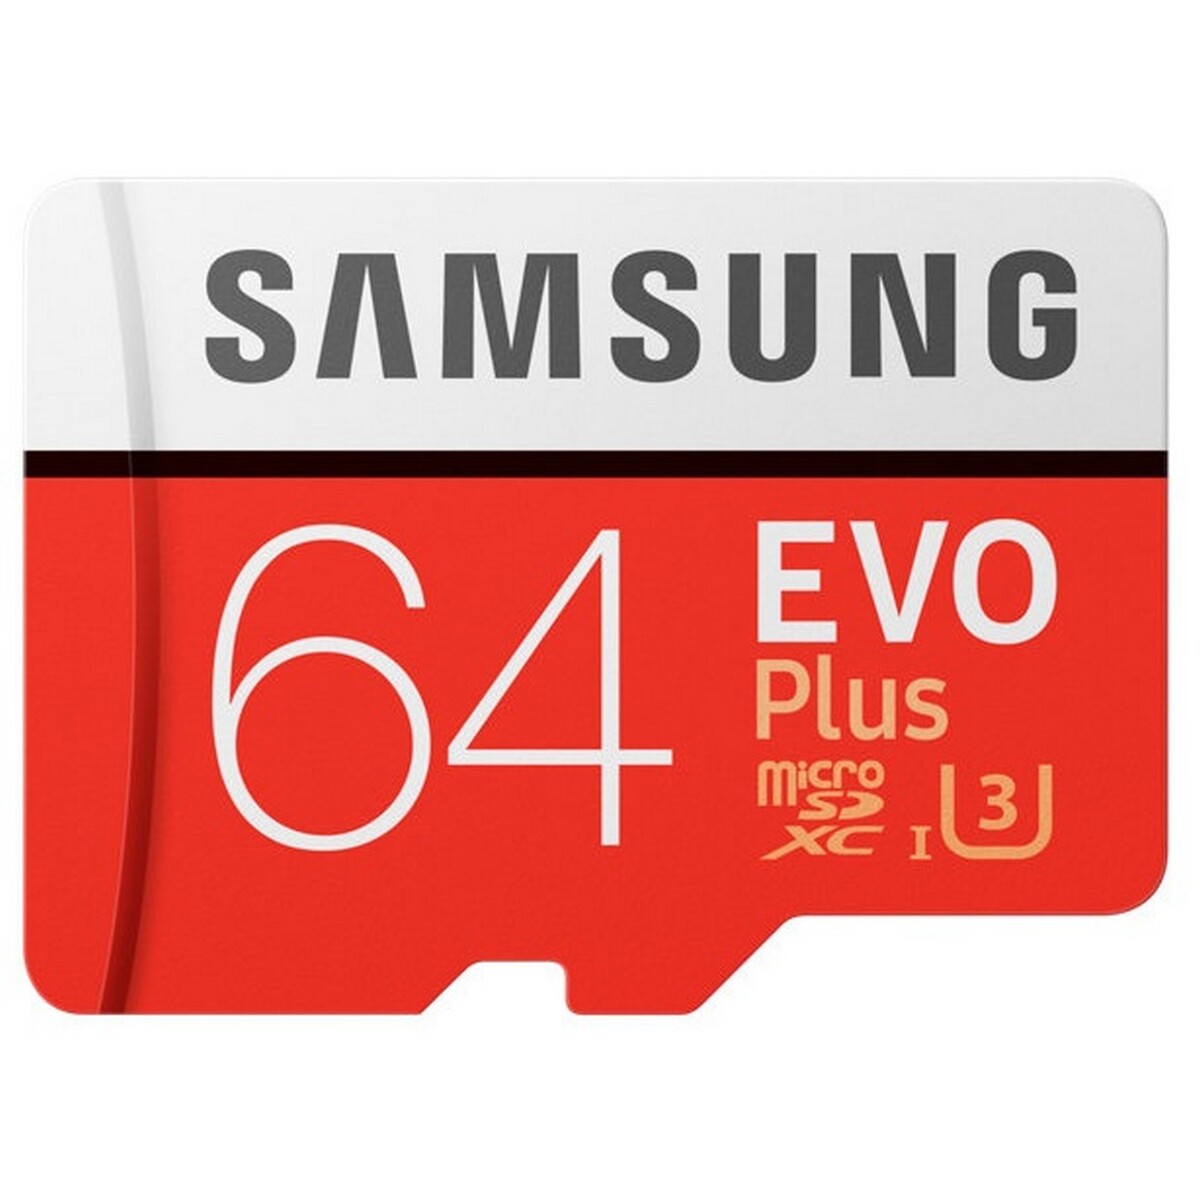 Samsung Micro SD Card Evo Plus 64GB